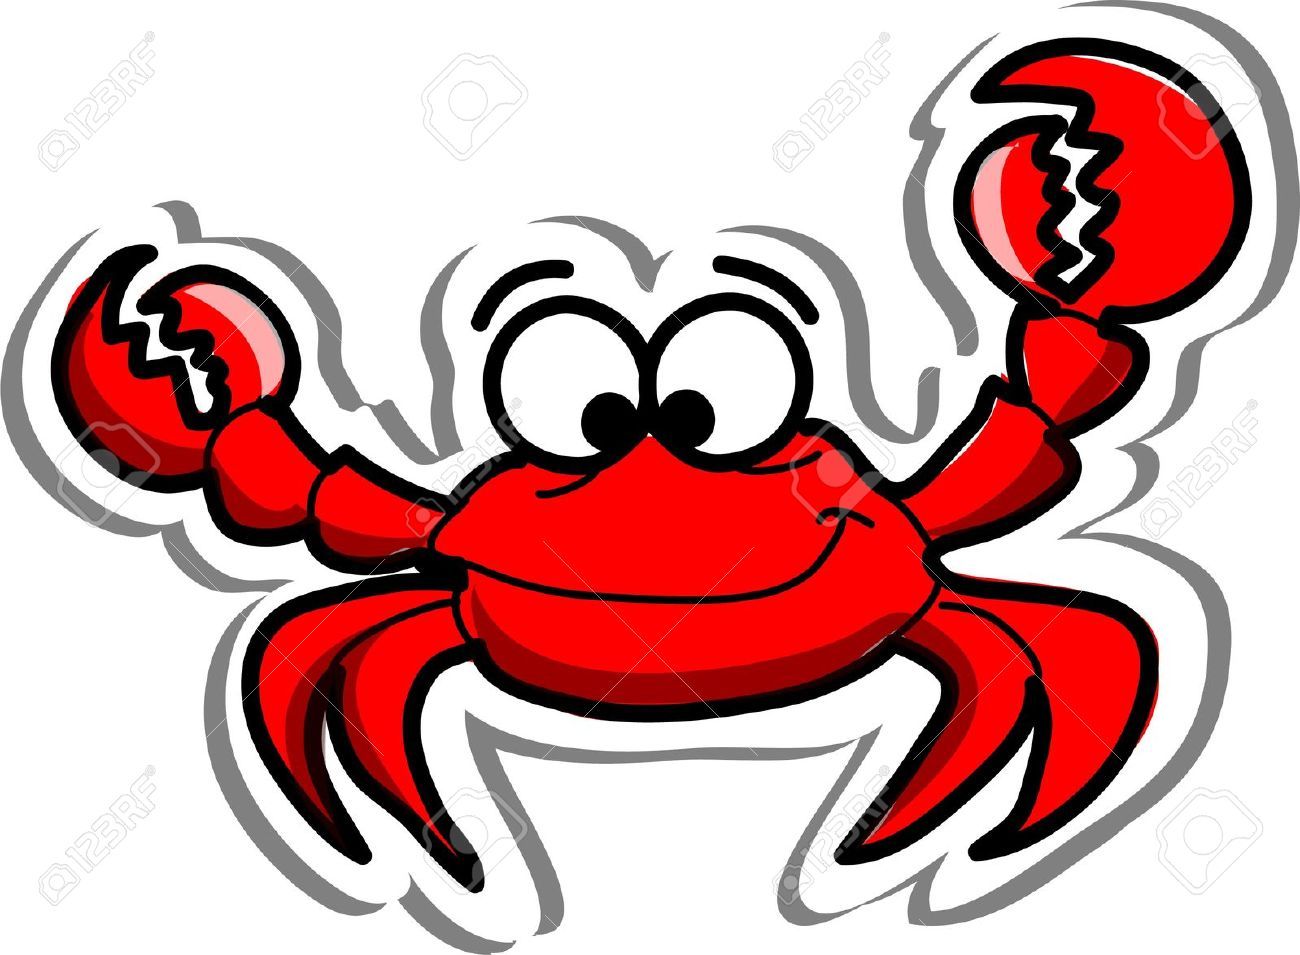 Crabs stock illustrations.